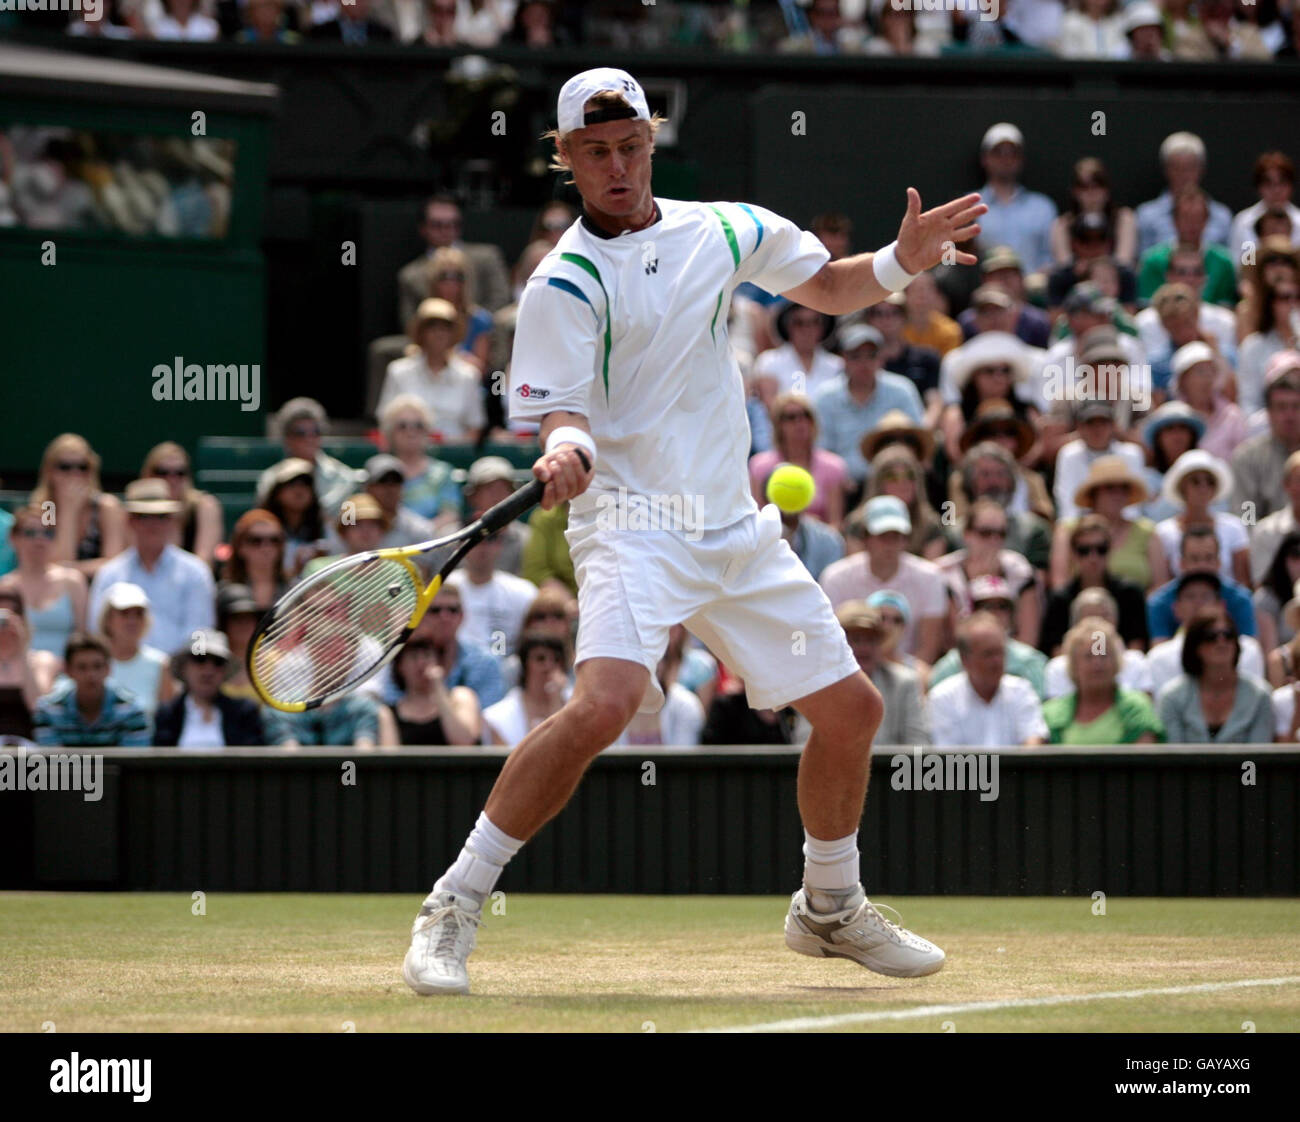 Lleyton Hewitt in Australia contro Roger Federer in Svizzera durante i Wimbledon Championships 2008 presso l'All England Tennis Club di Wimbledon. Foto Stock